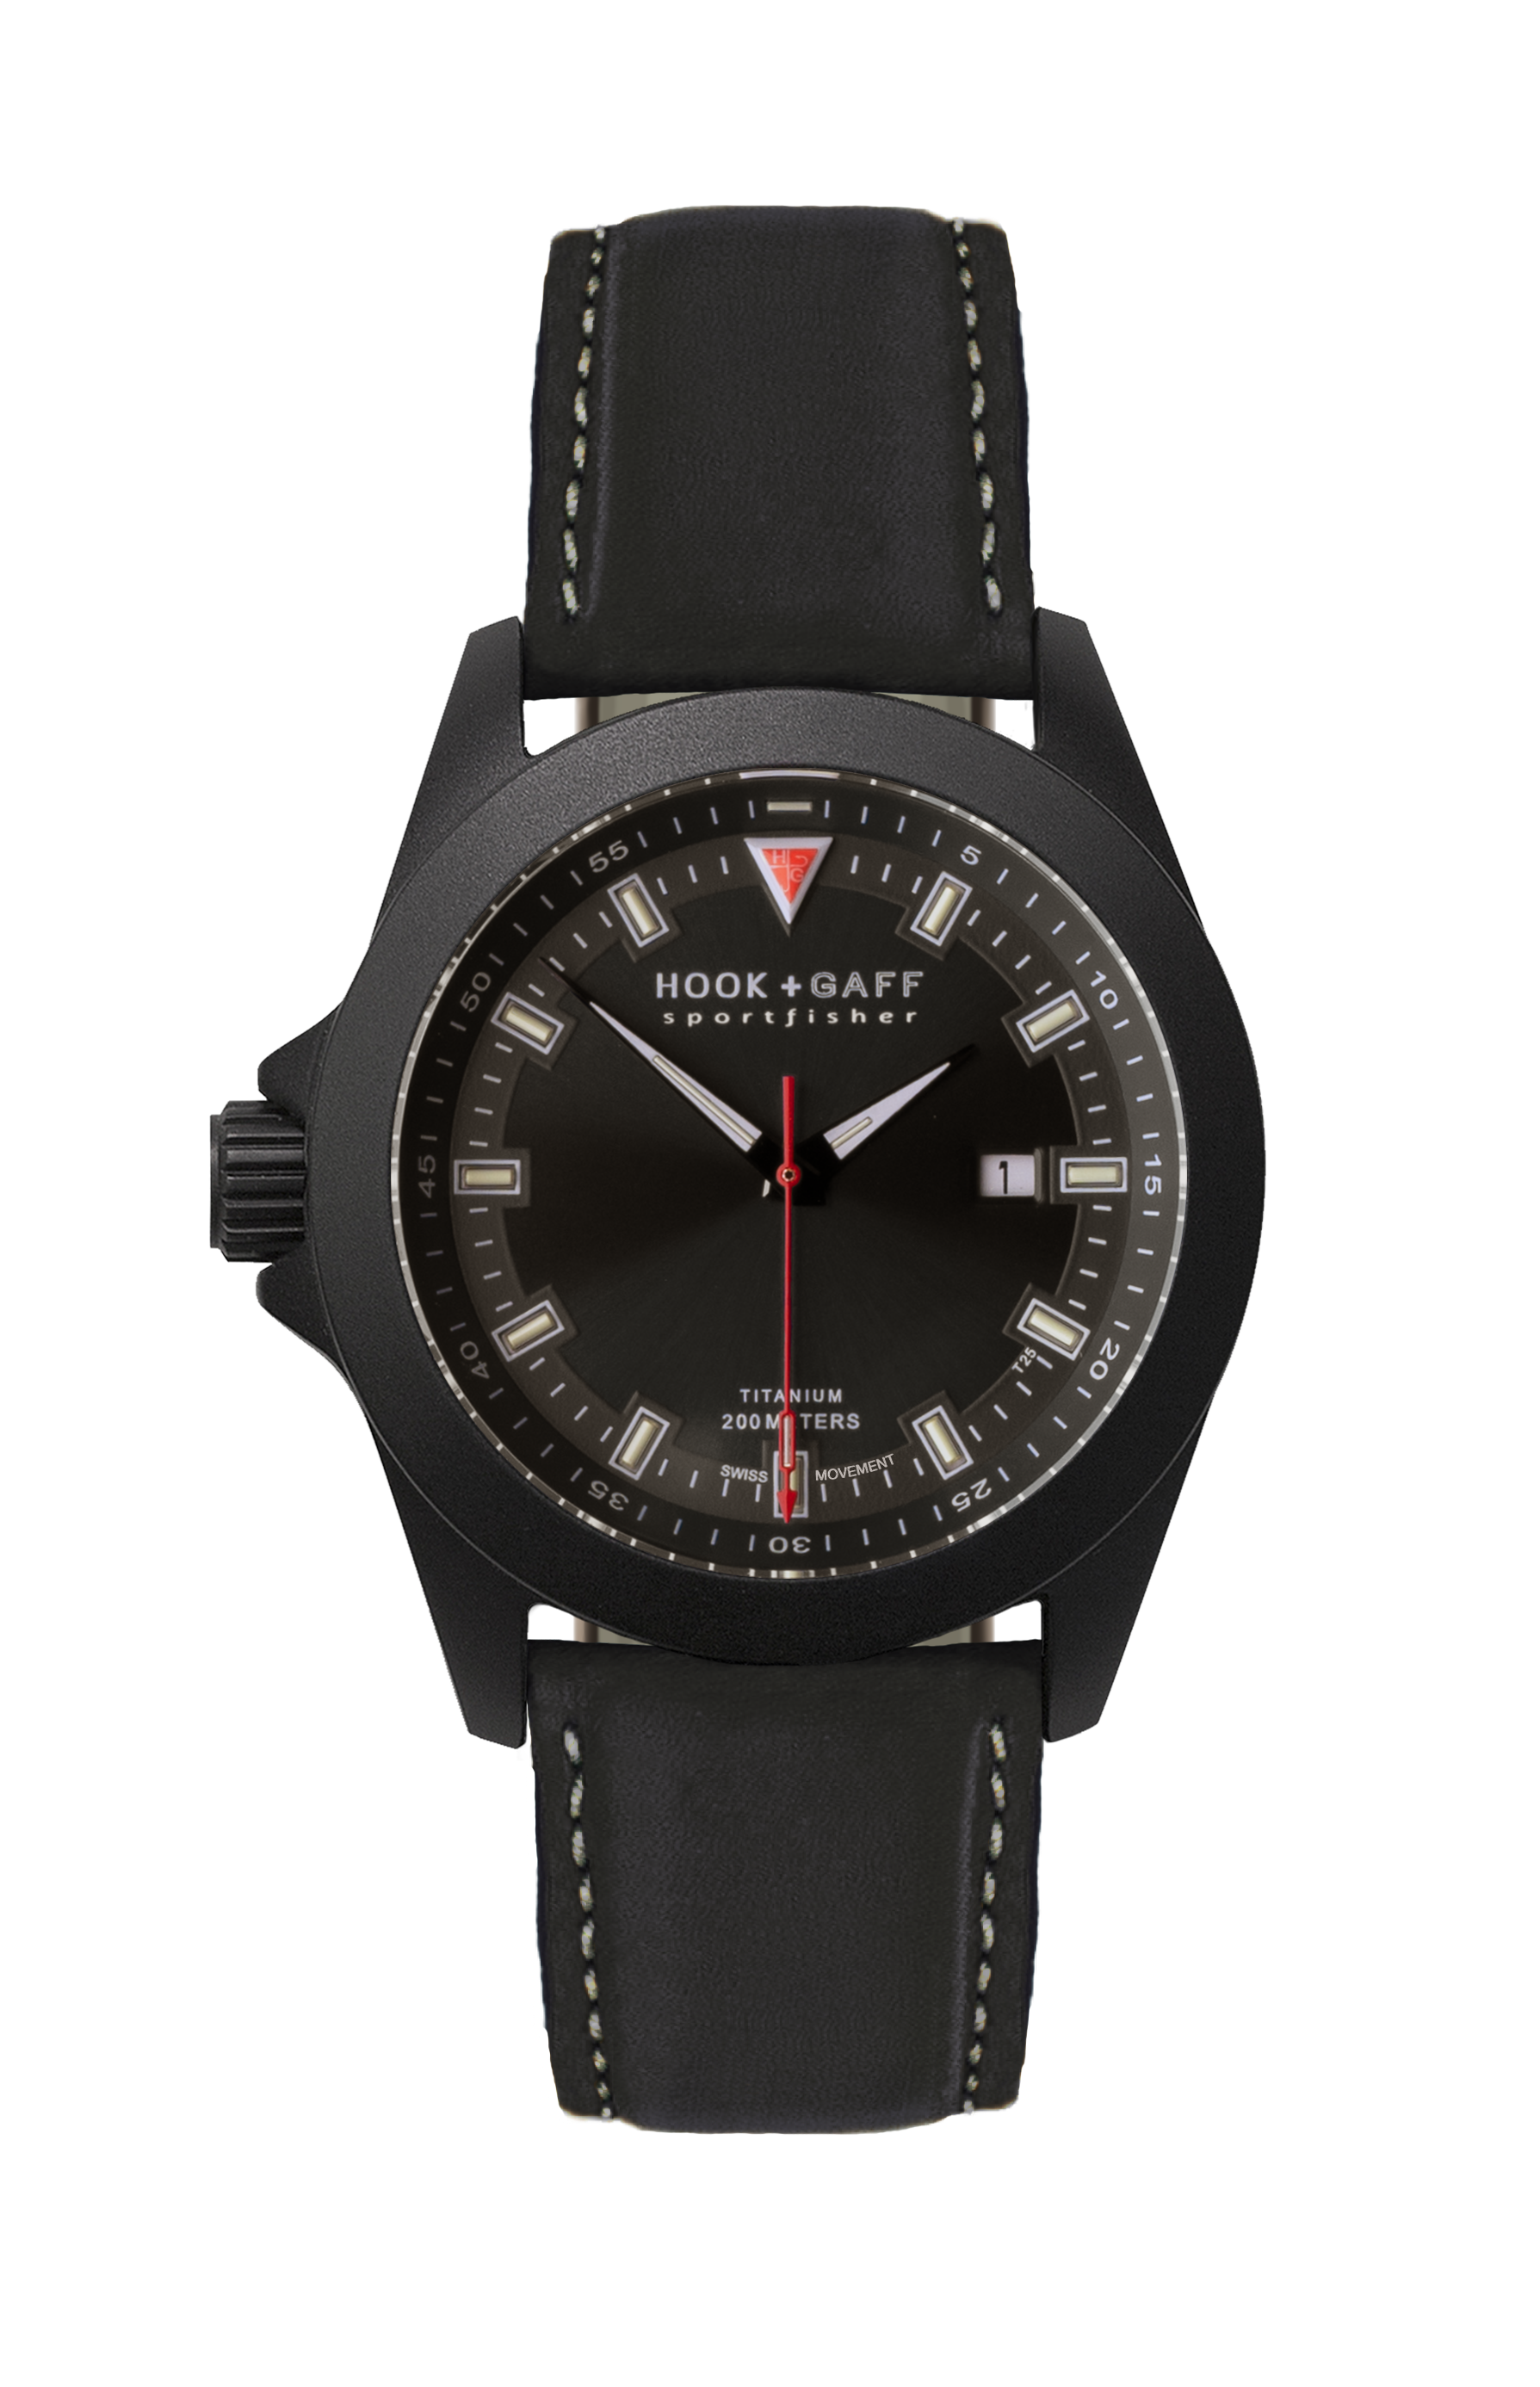 Sportfisher Black Face Watch - Black On Black Watch Leather Black / Black / Hook+Gaff